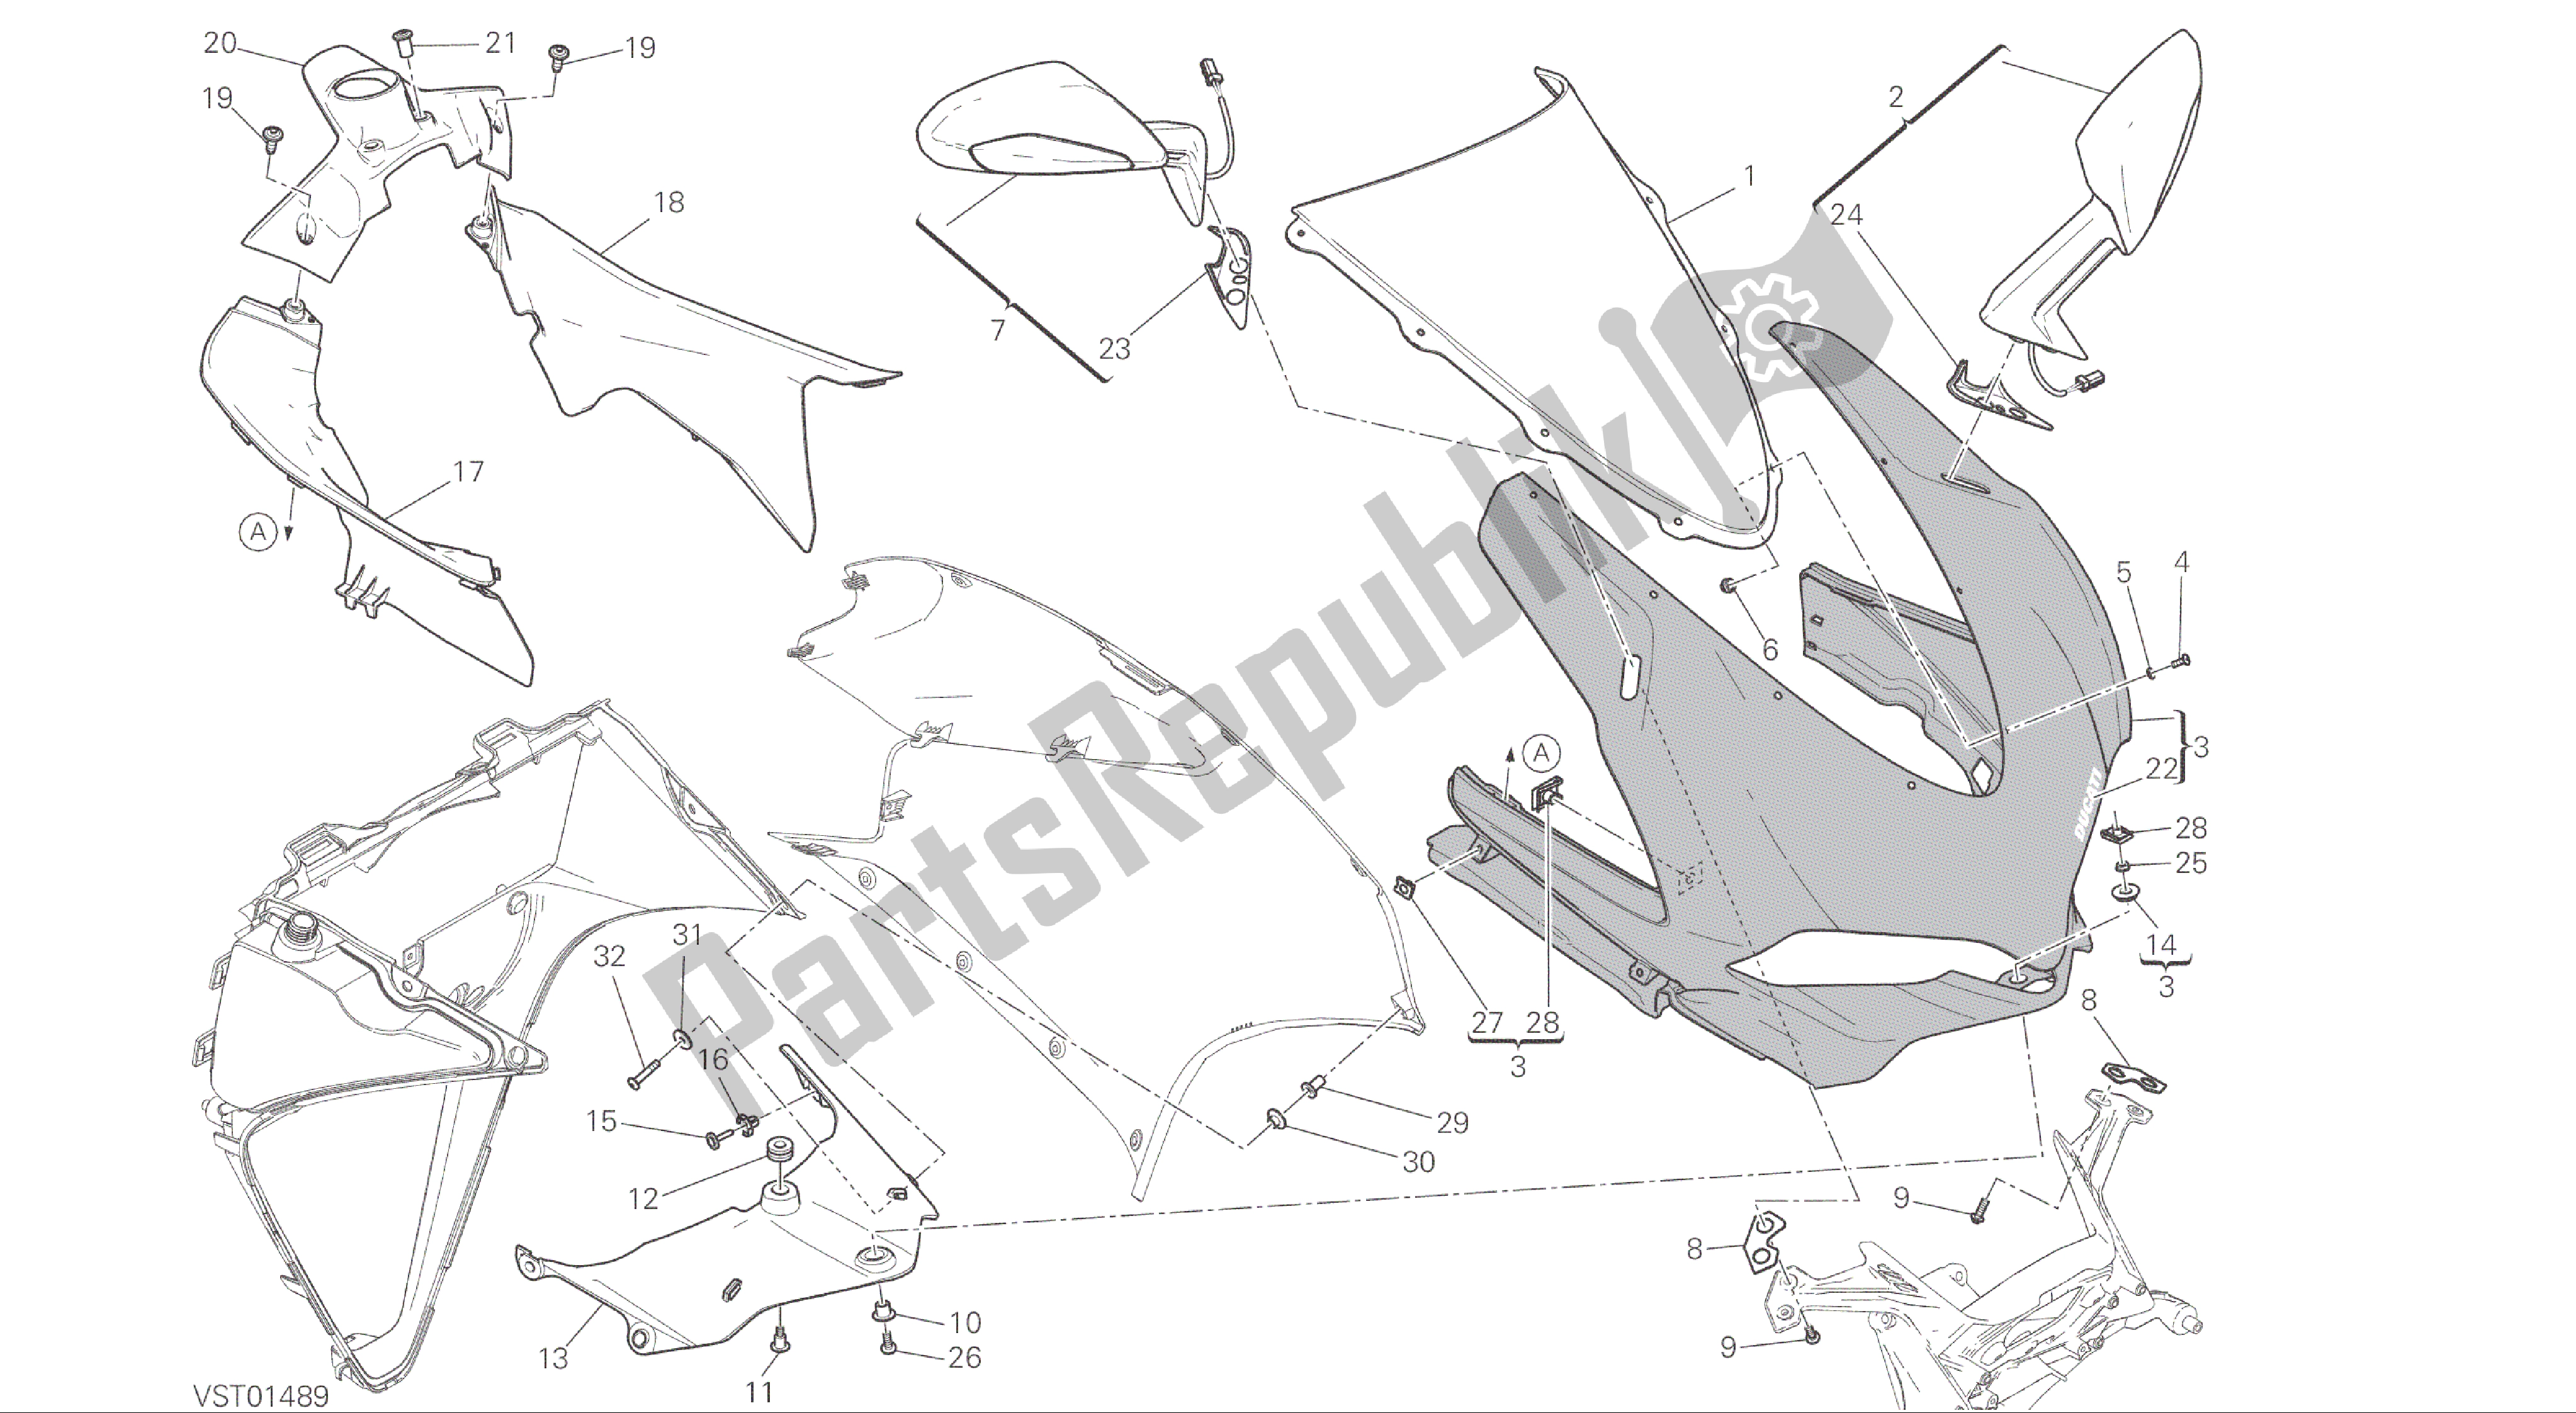 Alle onderdelen voor de Tekening 034 - Motorkap [mod: 1299; Xst: Aus, Eur, Fra, Jap, Twn] Groepsframe van de Ducati Panigale ABS 1299 2016